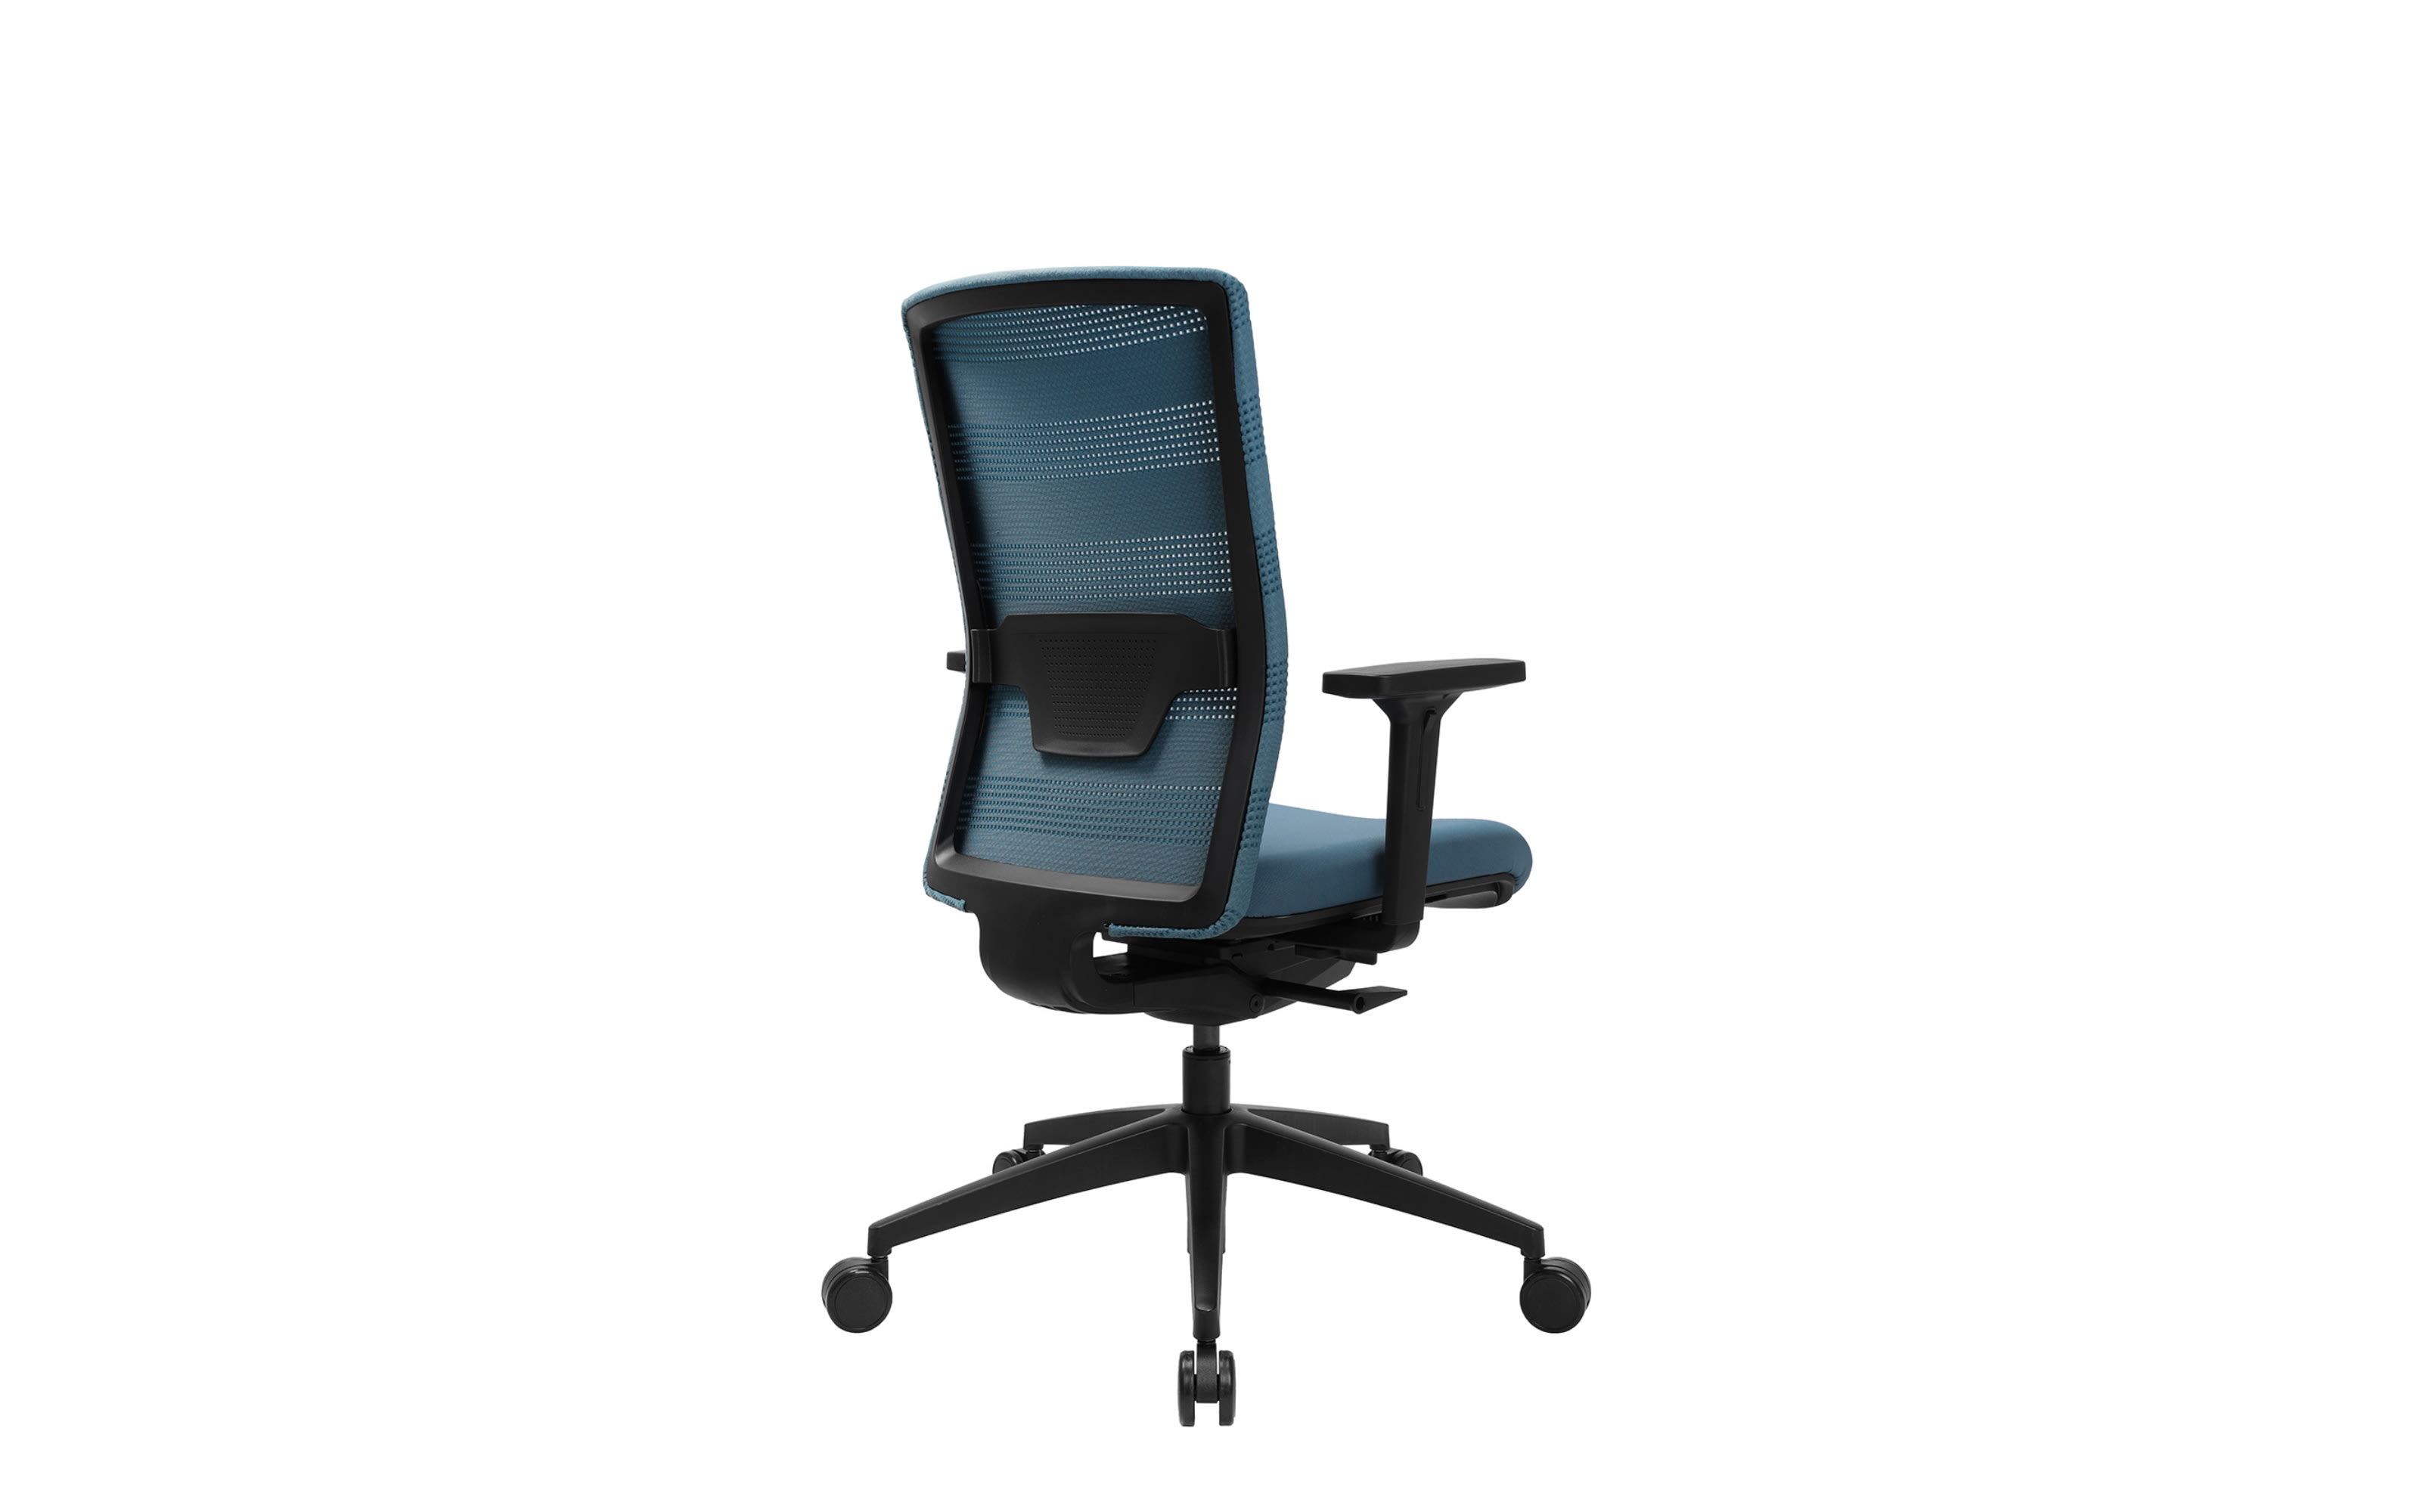 Bürostuhl Sitness Airwork, Textilbezug blau, Kunststofffußkreuz schwarz